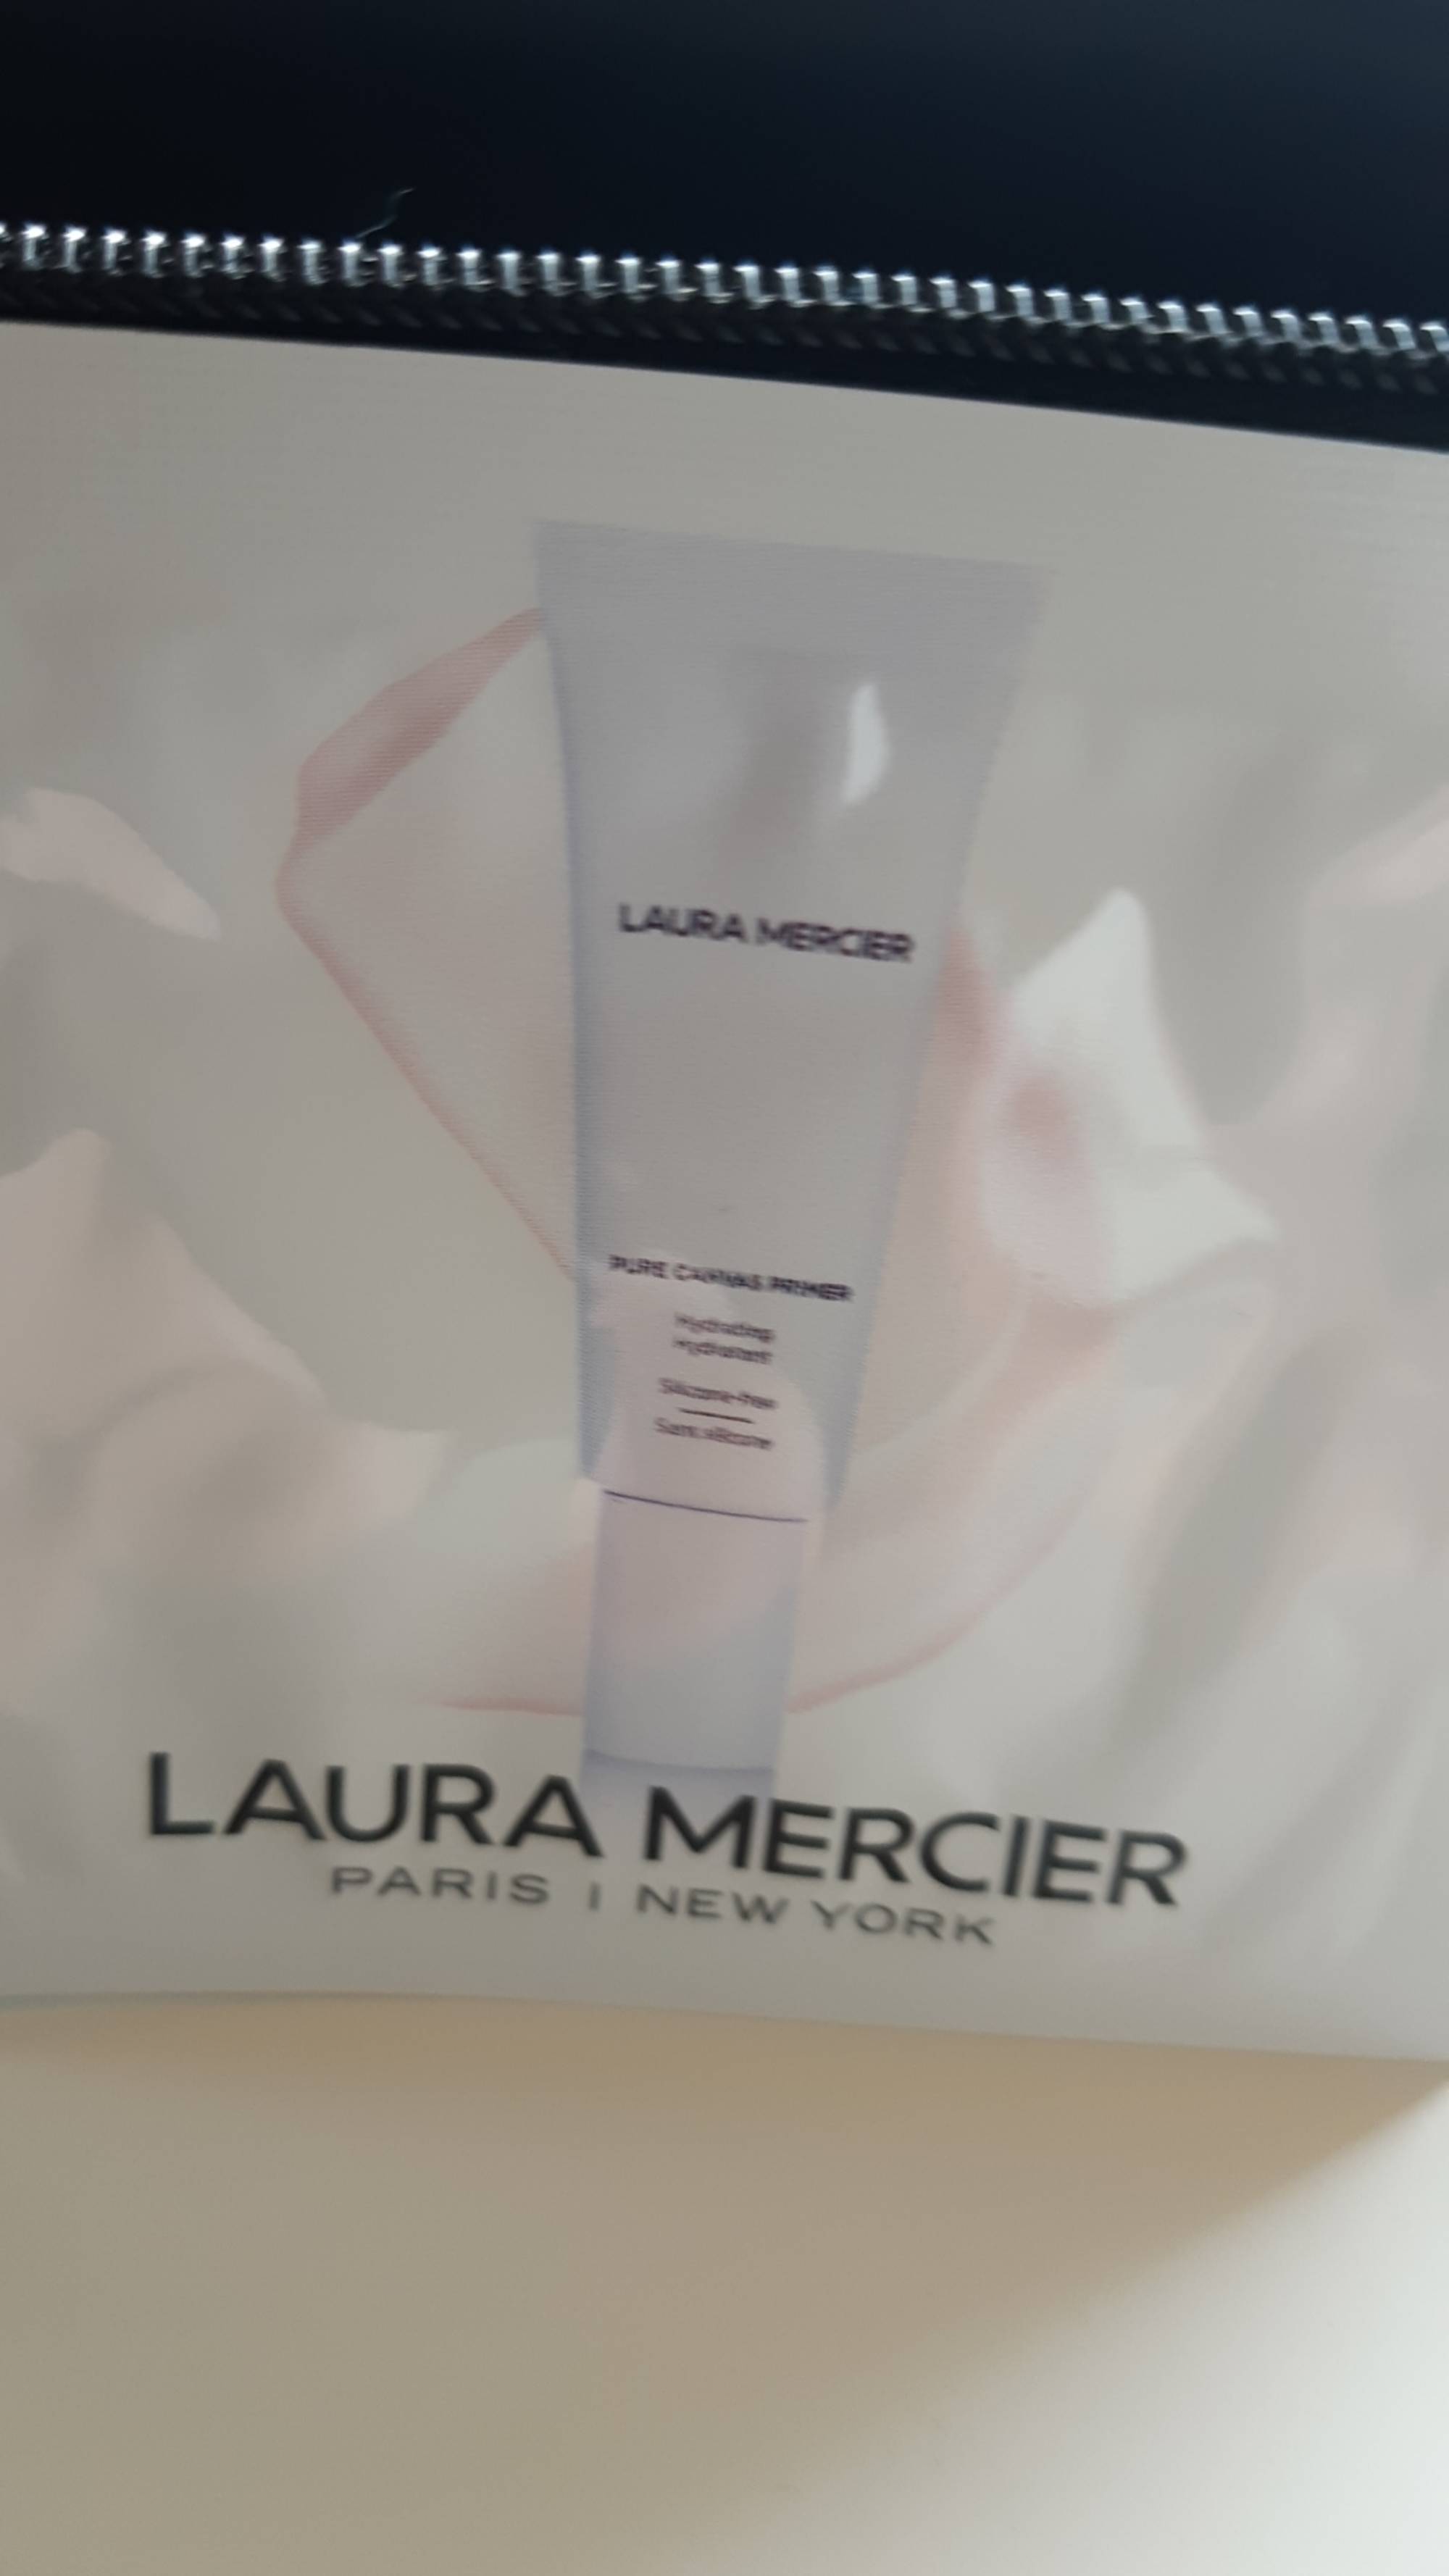 LAURA MERCIER - Pure canvas primer